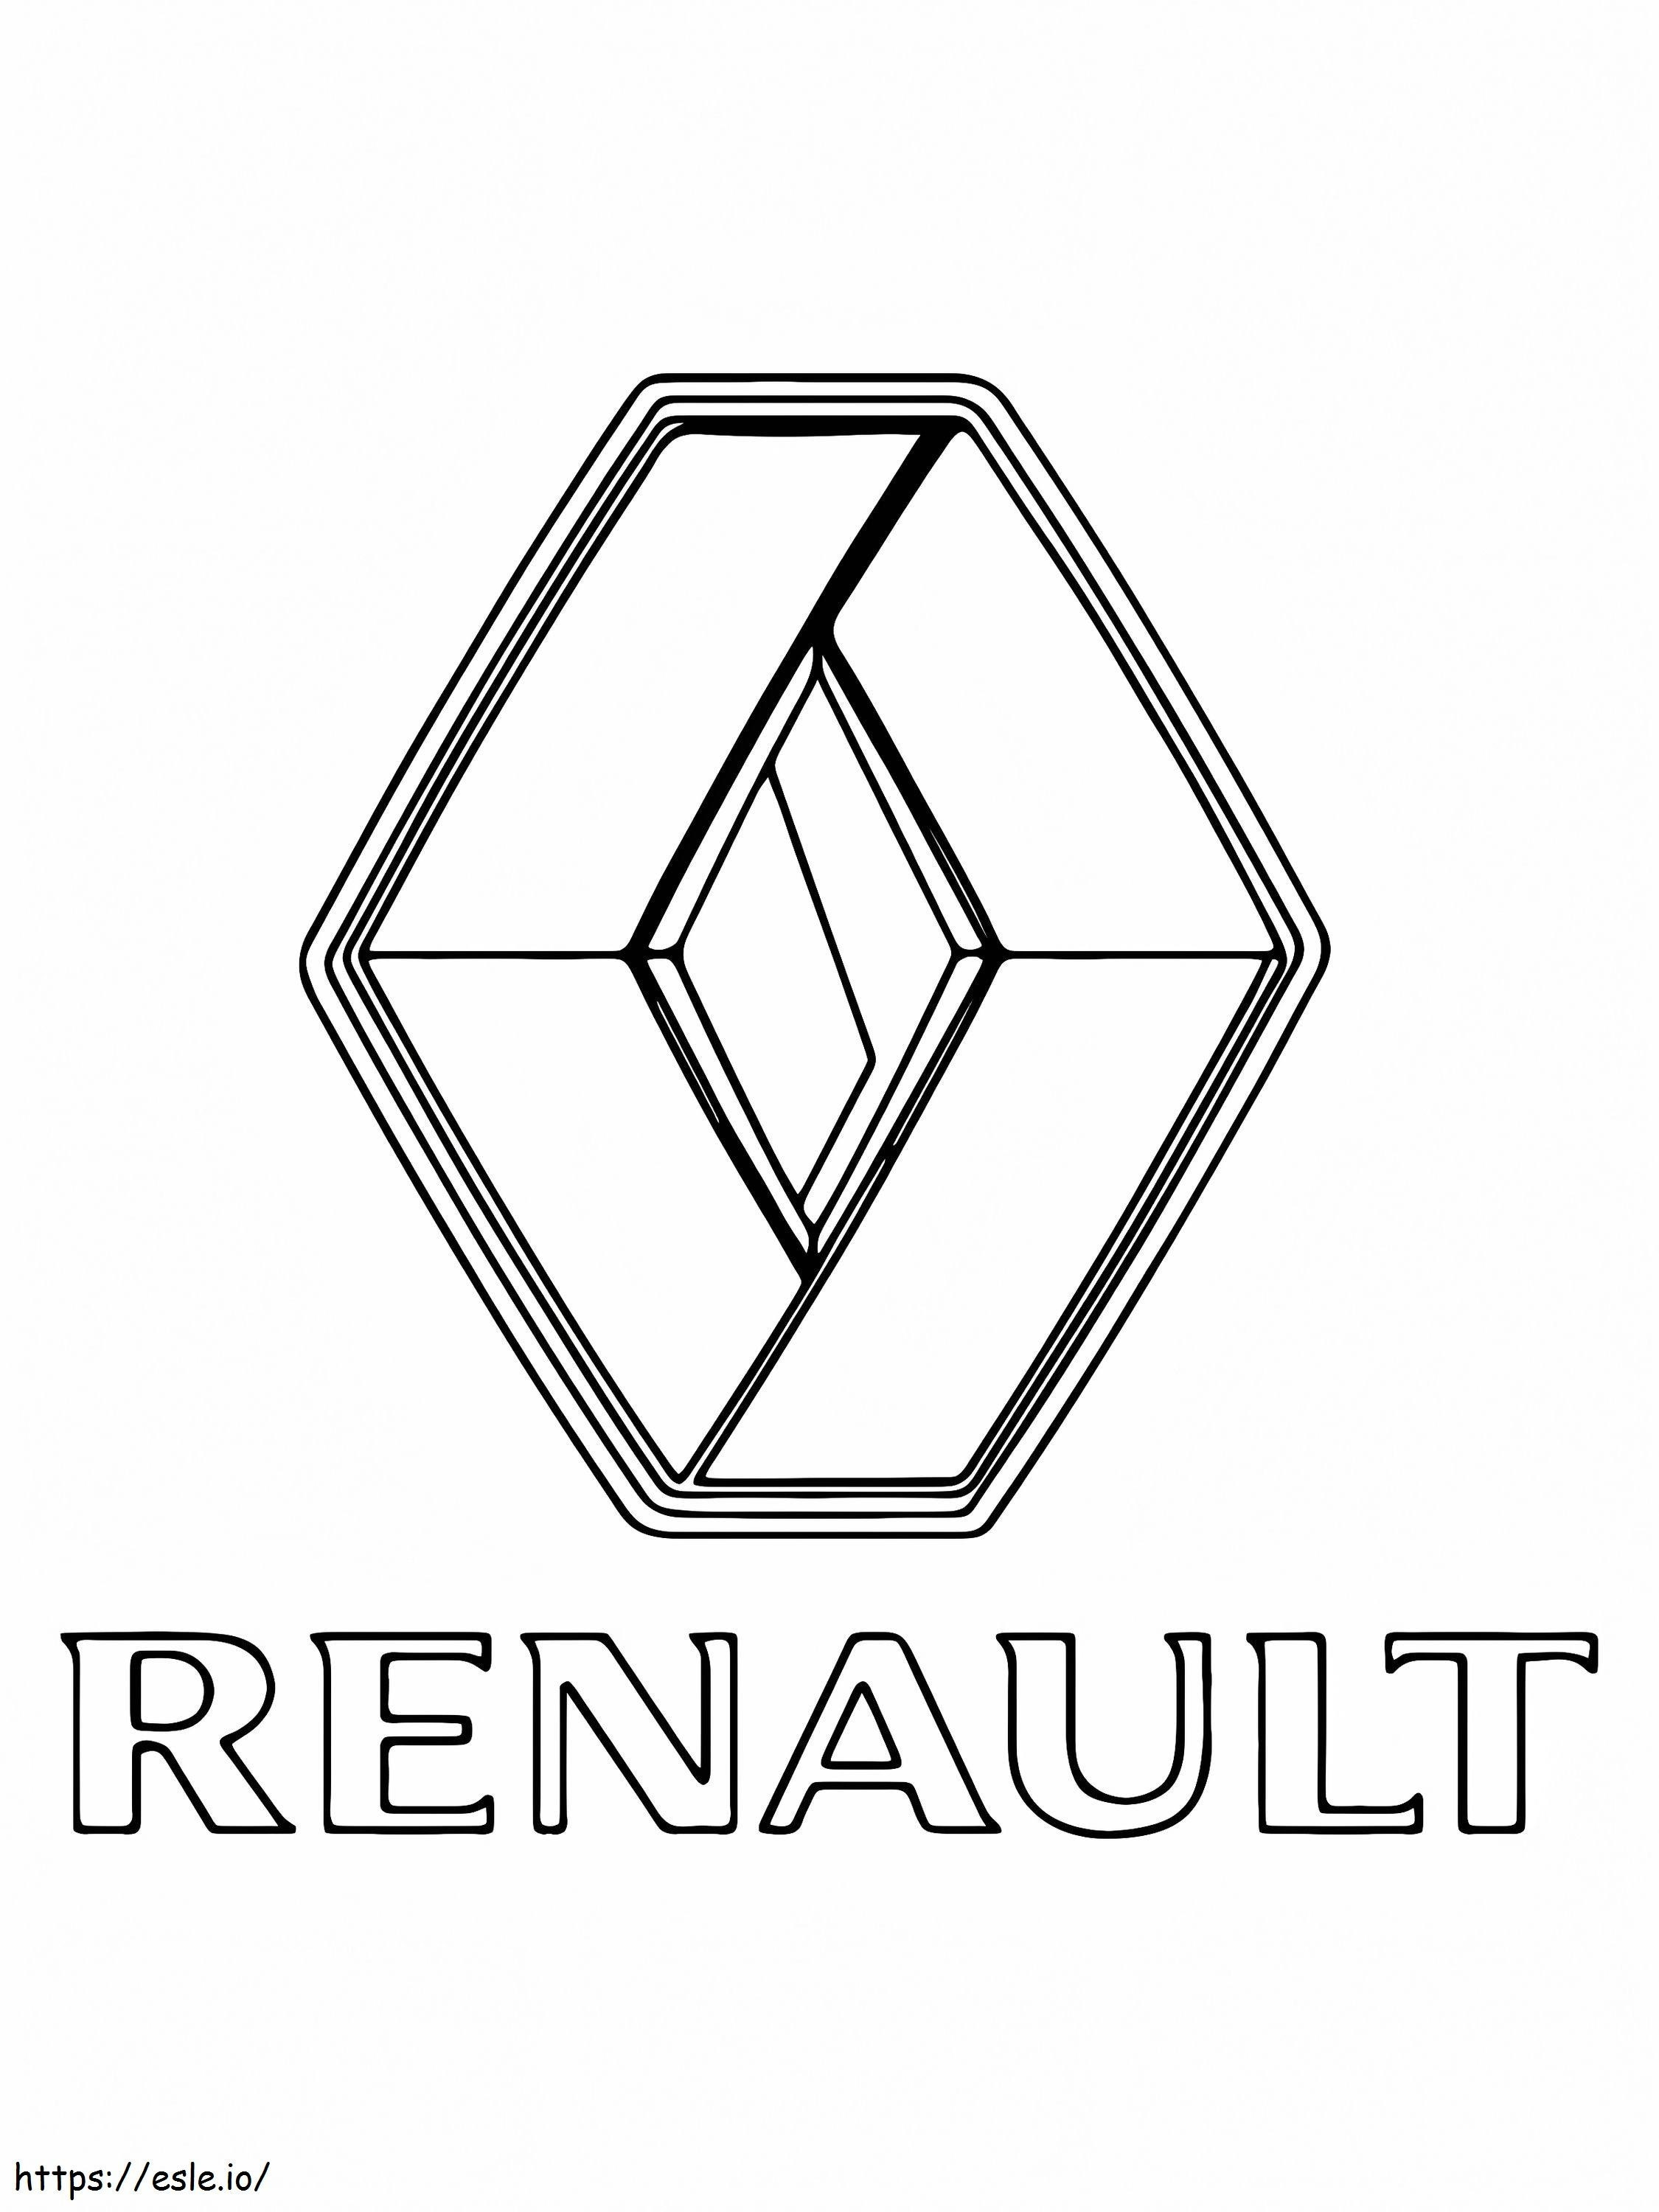 Renault Araba Logosu boyama